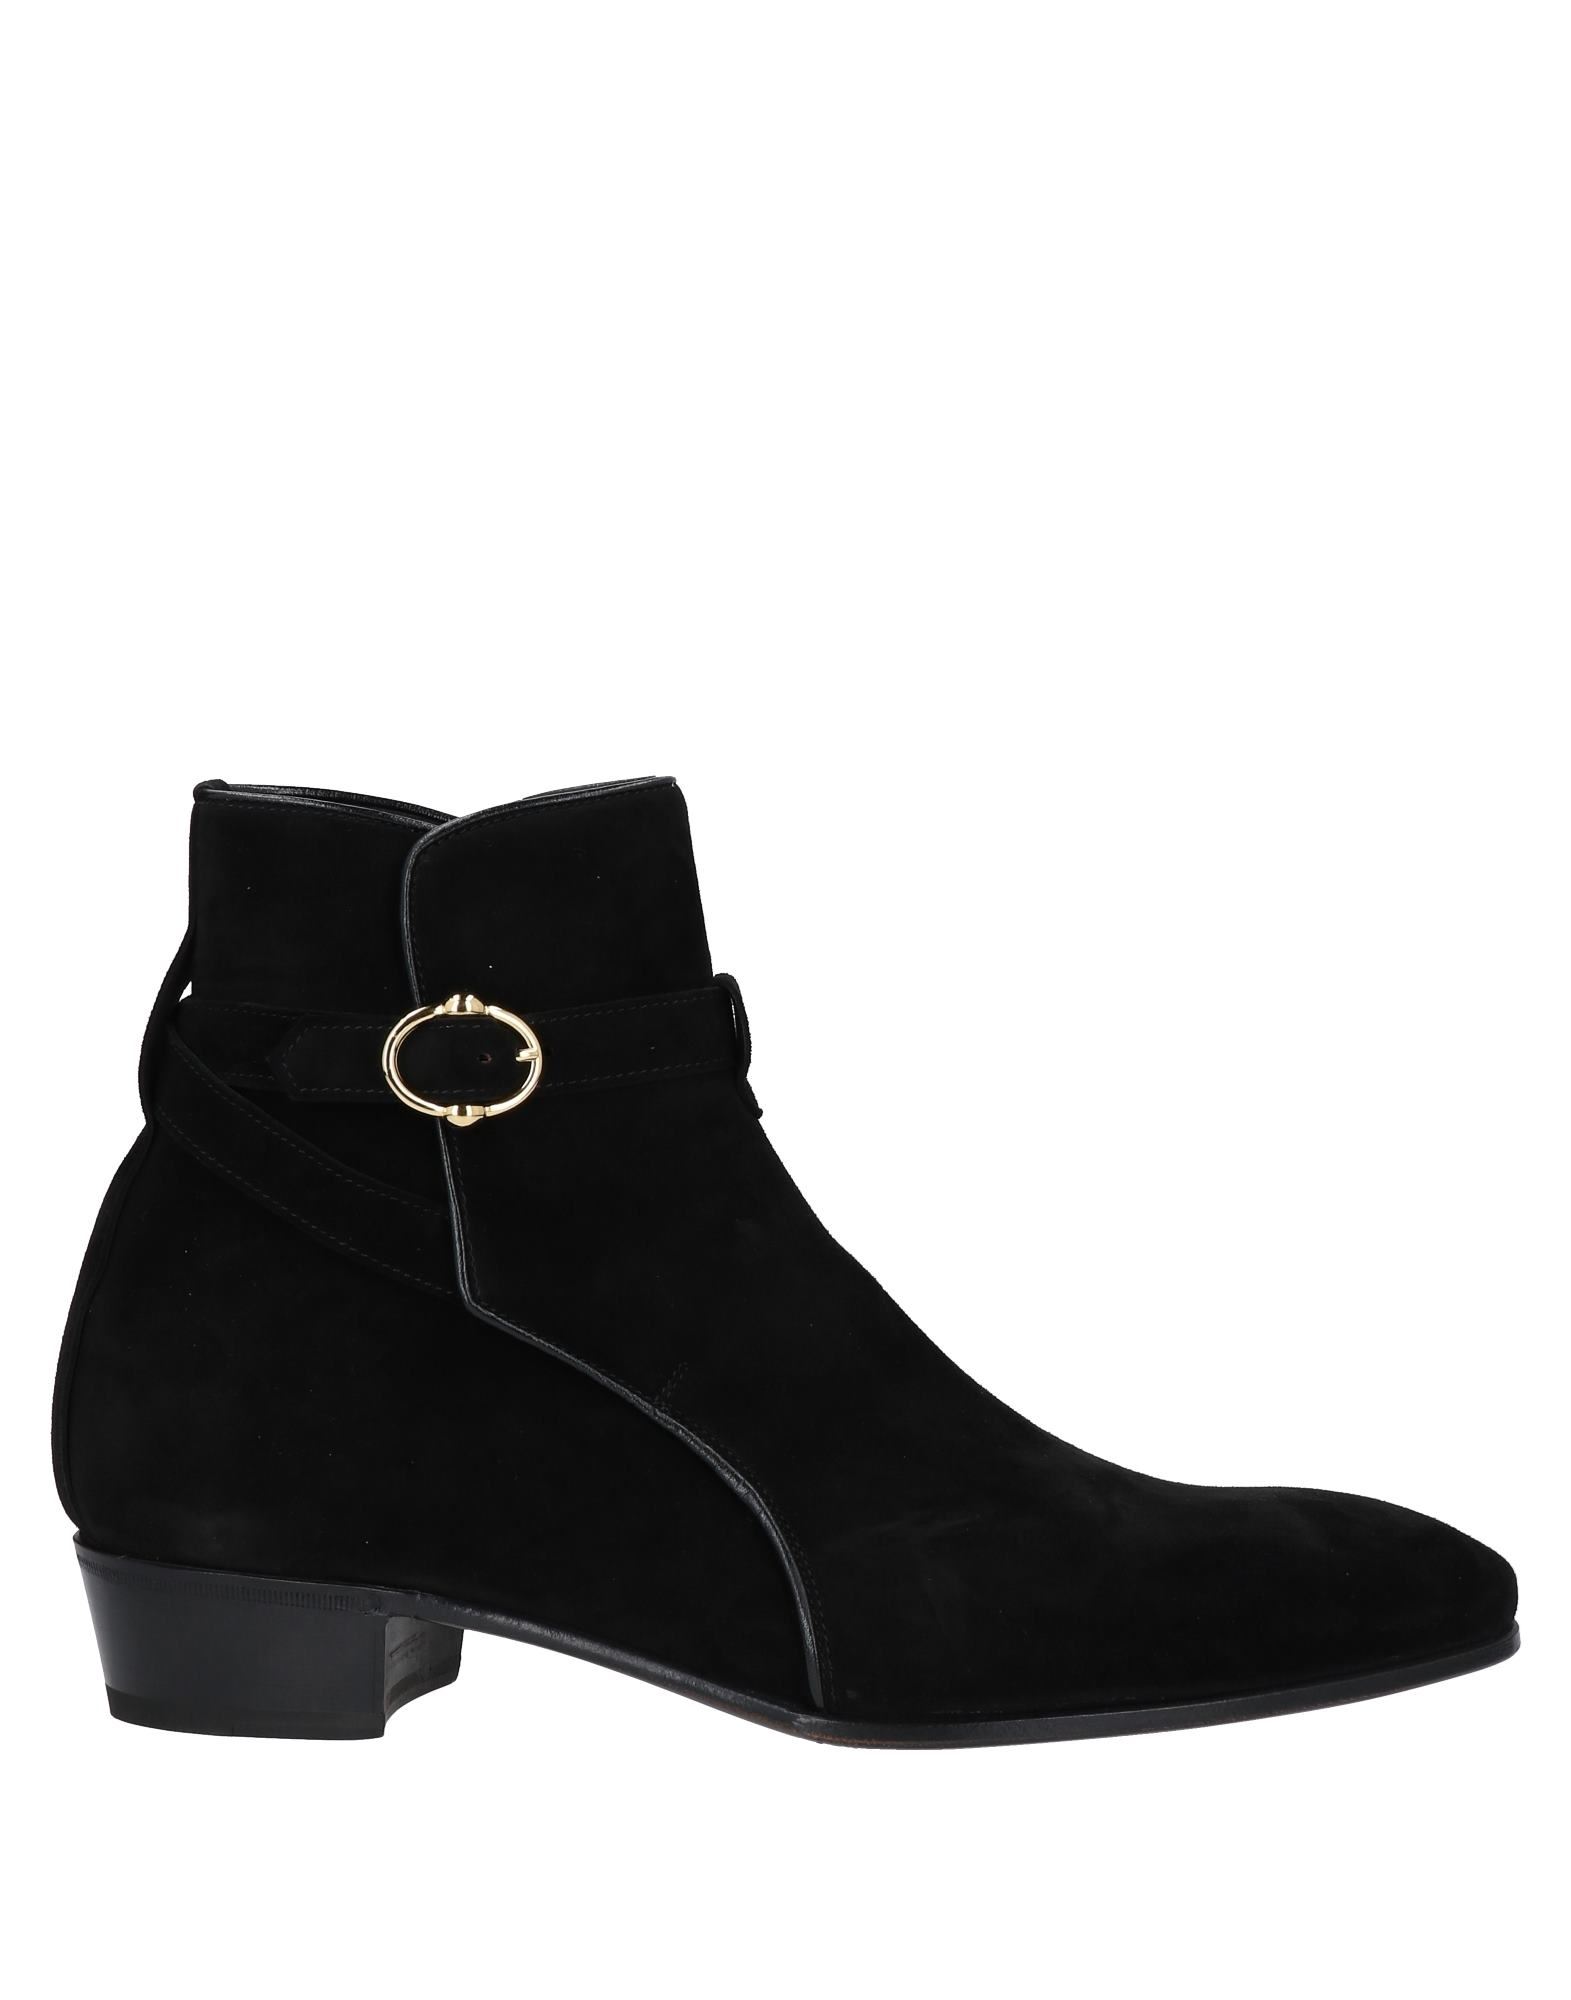 Shop Lidfort Man Ankle Boots Black Size 6 Soft Leather